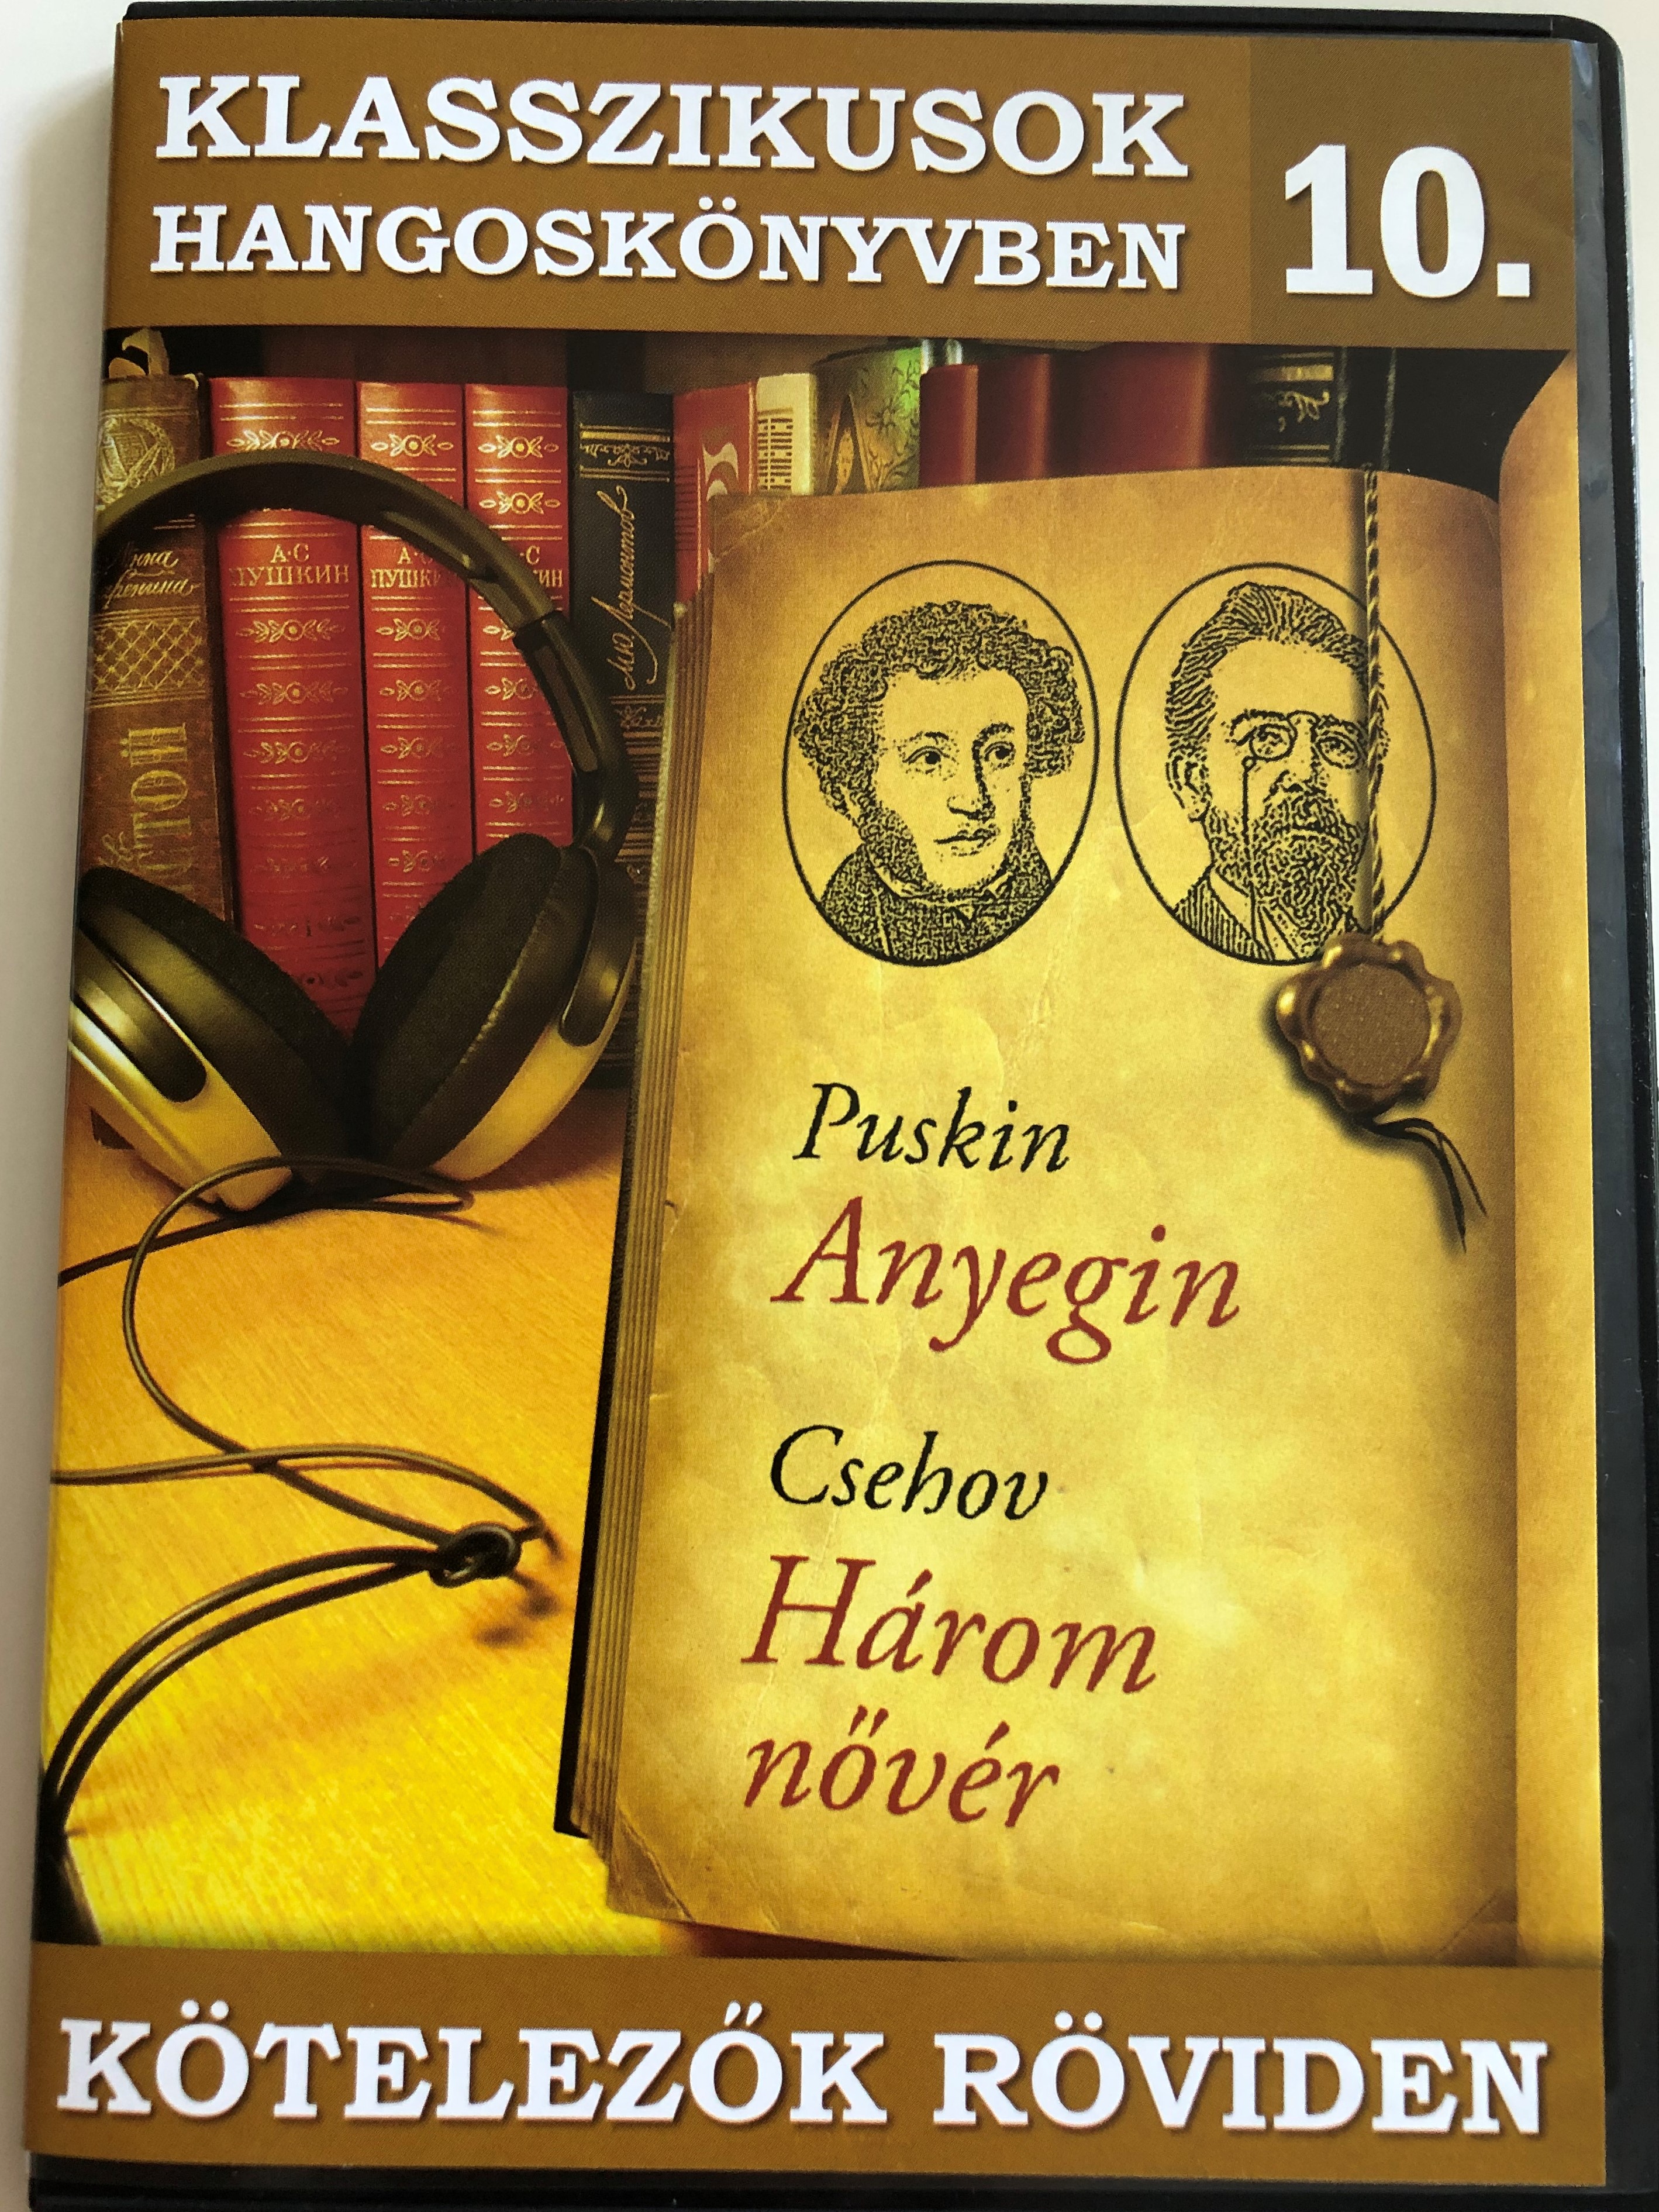 klasszikusok-hangosk-nyvben-10.-puskin-anyegin-csehov-h-rom-n-v-r-k-telez-k-r-viden-classic-writers-in-audio-10.-hungarian-audio-book-audio-cd-2009-ercd-9010-1-.jpg